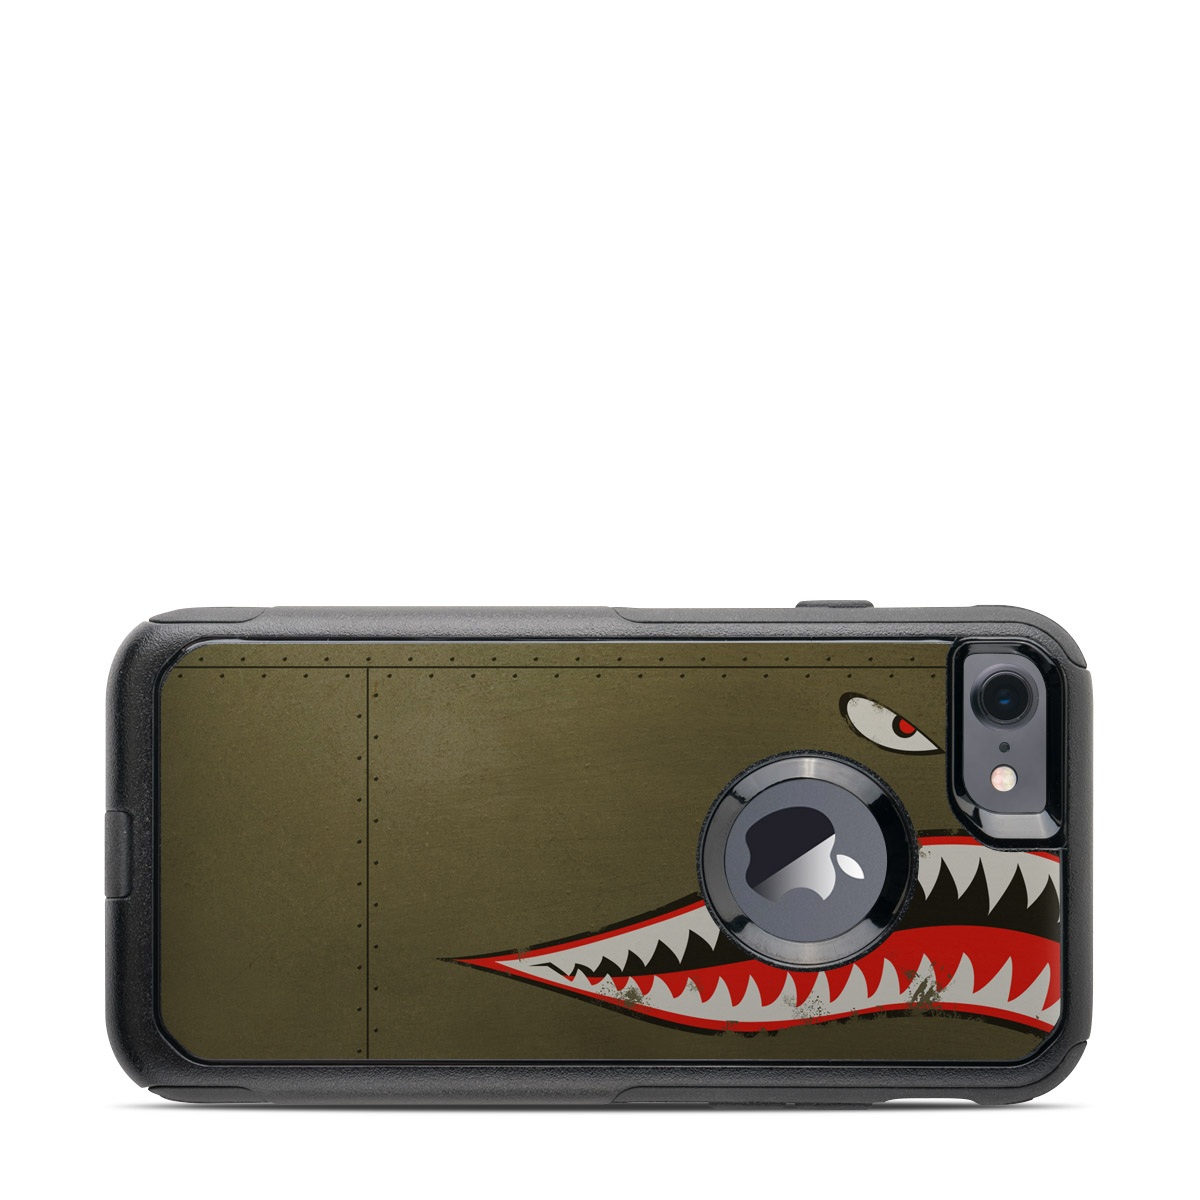 OtterBox Commuter iPhone 7 Case Skin - USAF Shark (Image 1)